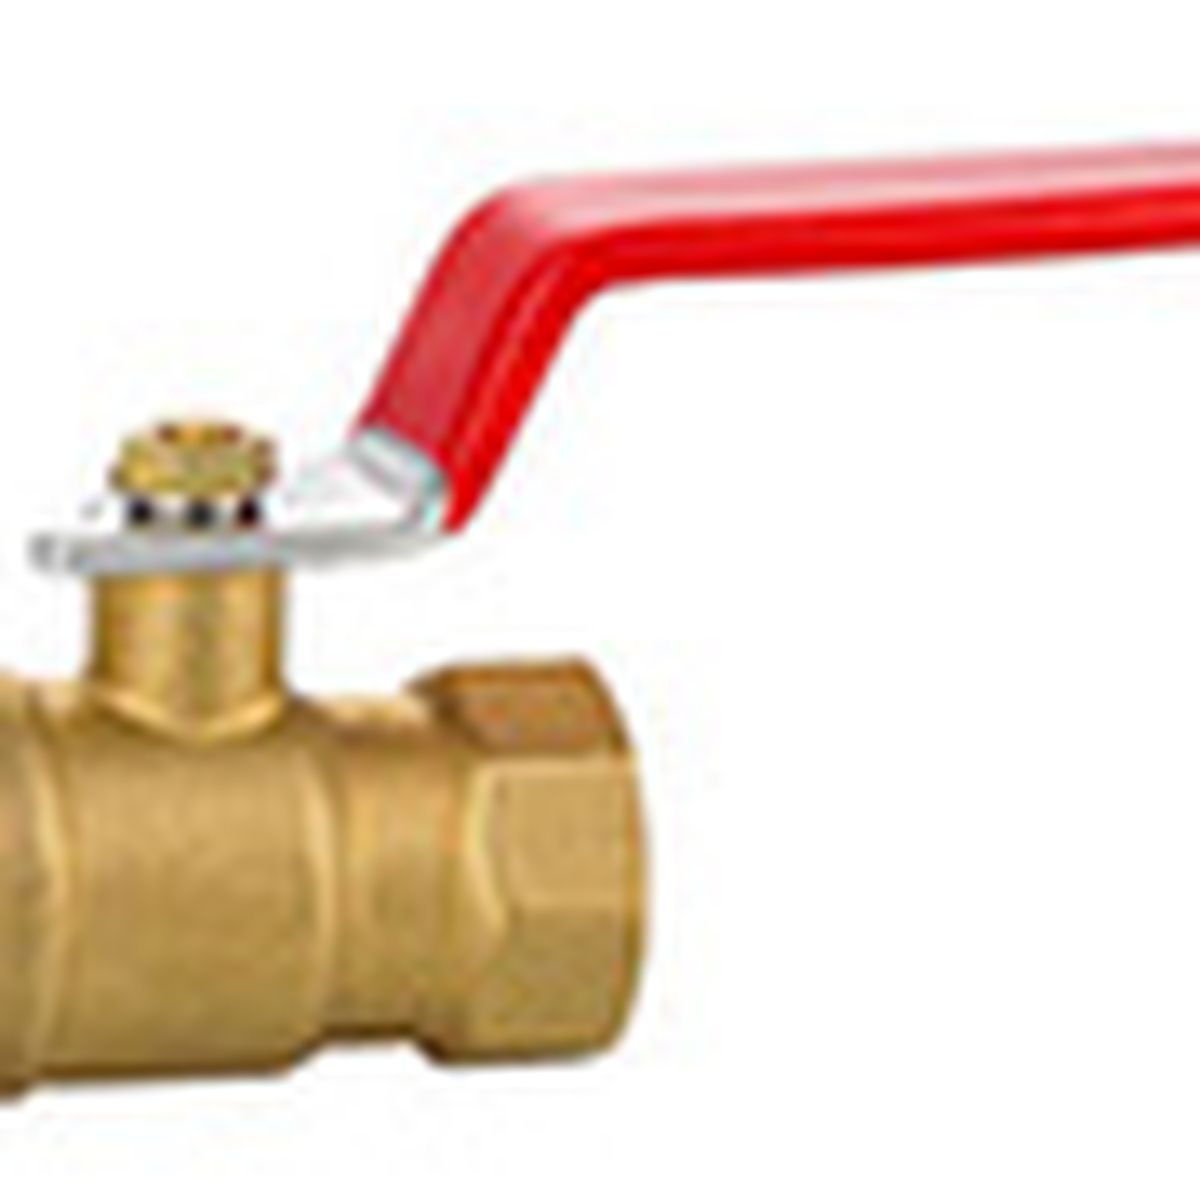 valve receding tool for installing an outdoor faucet